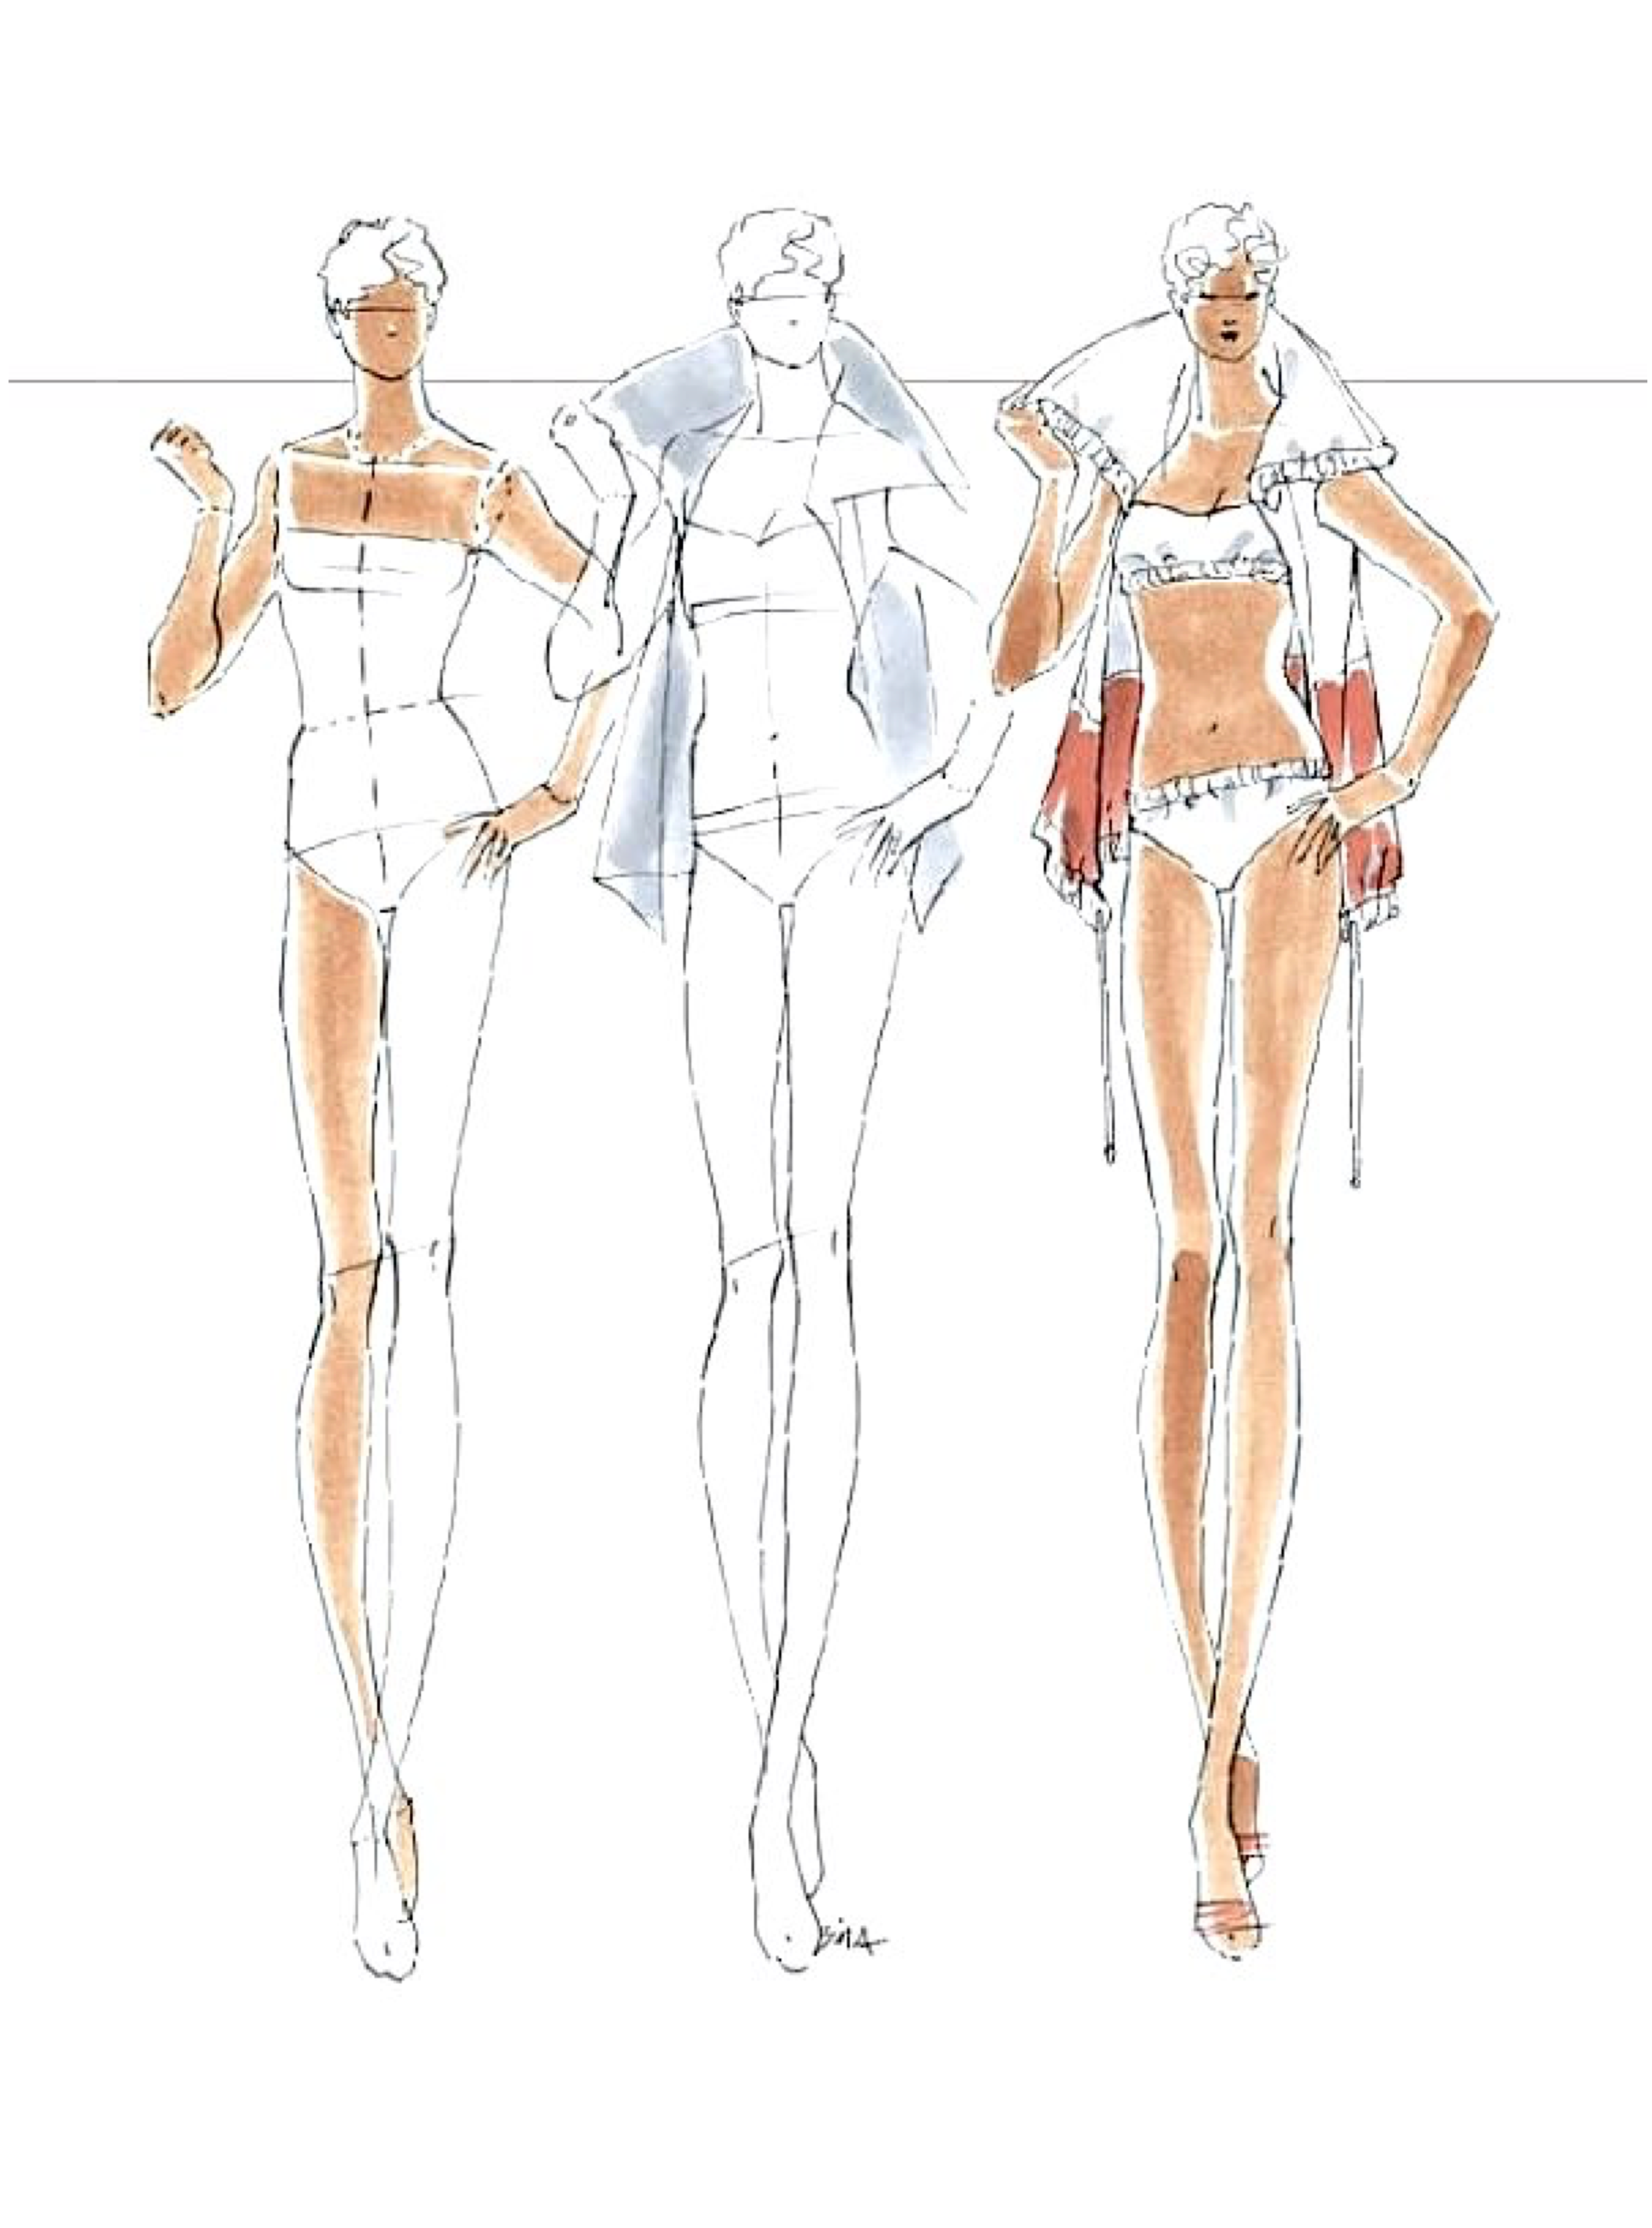 Fashion women sketch vector free download